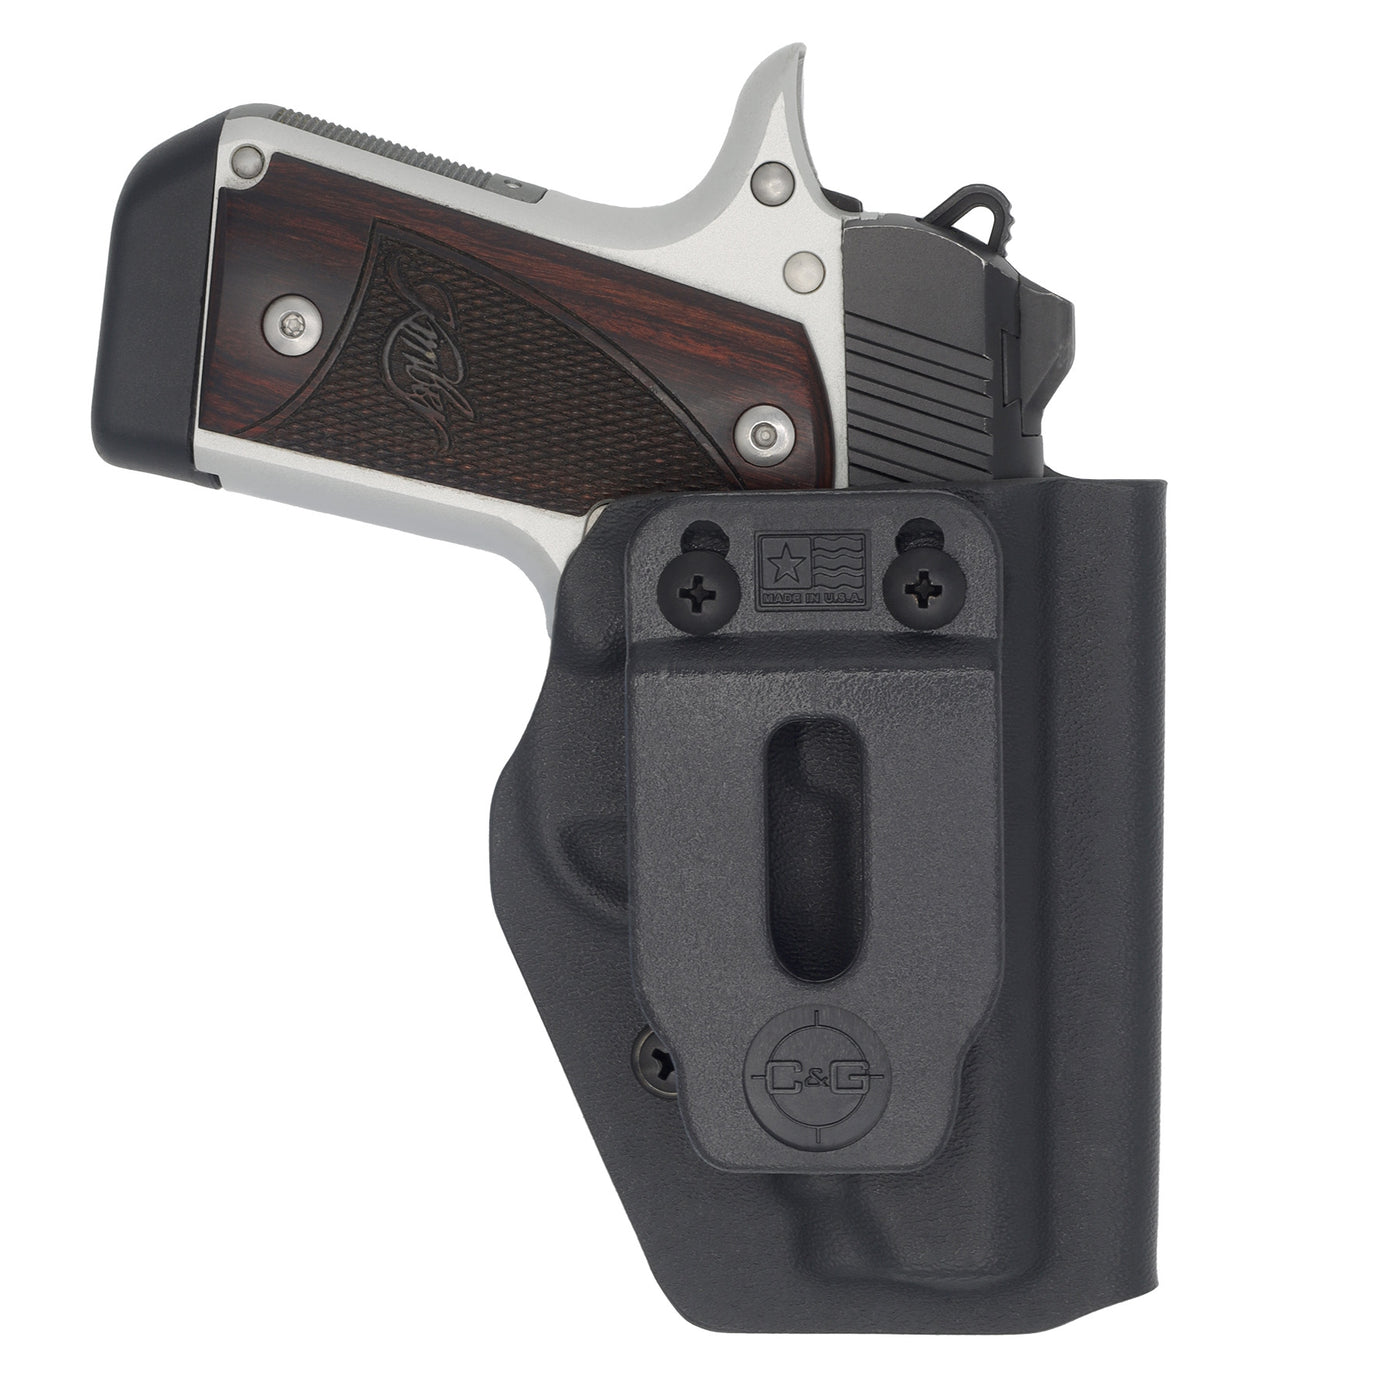 C&G Holsters Covert inside the waistband kydex holster for Kimber Micro 380 in black